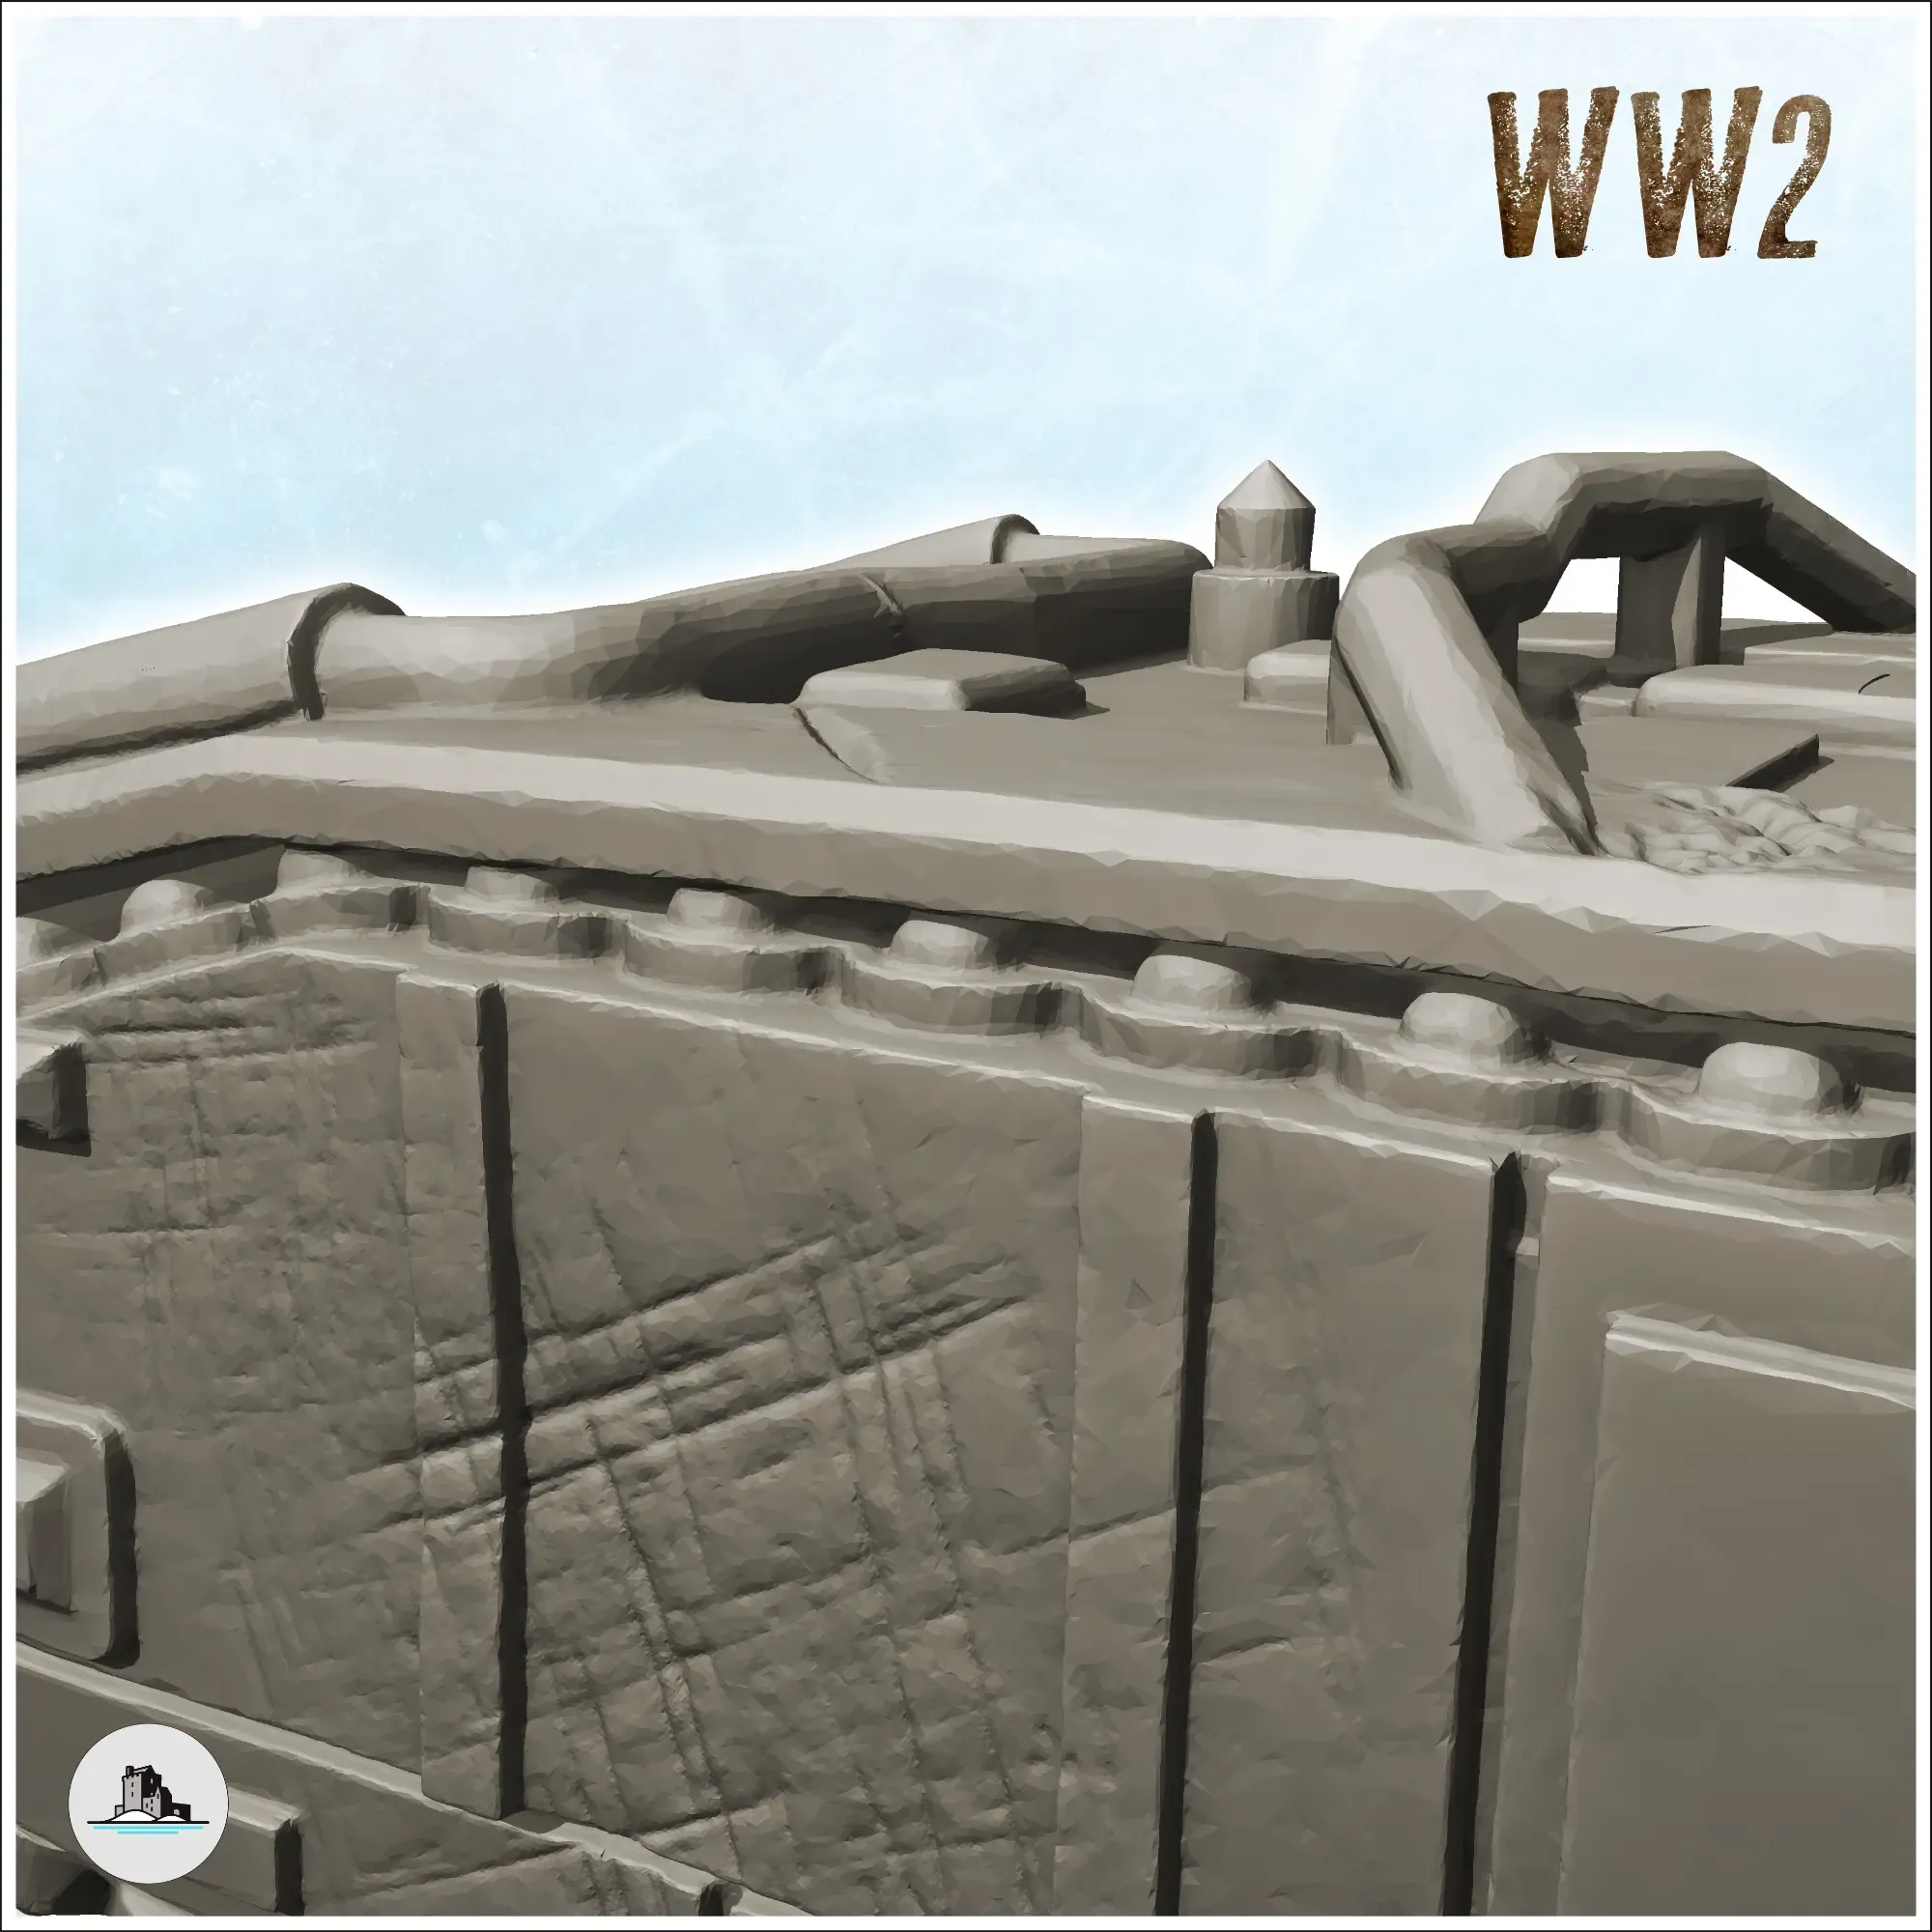 B1-bis French tank - terrain WW2 scenery historical mini